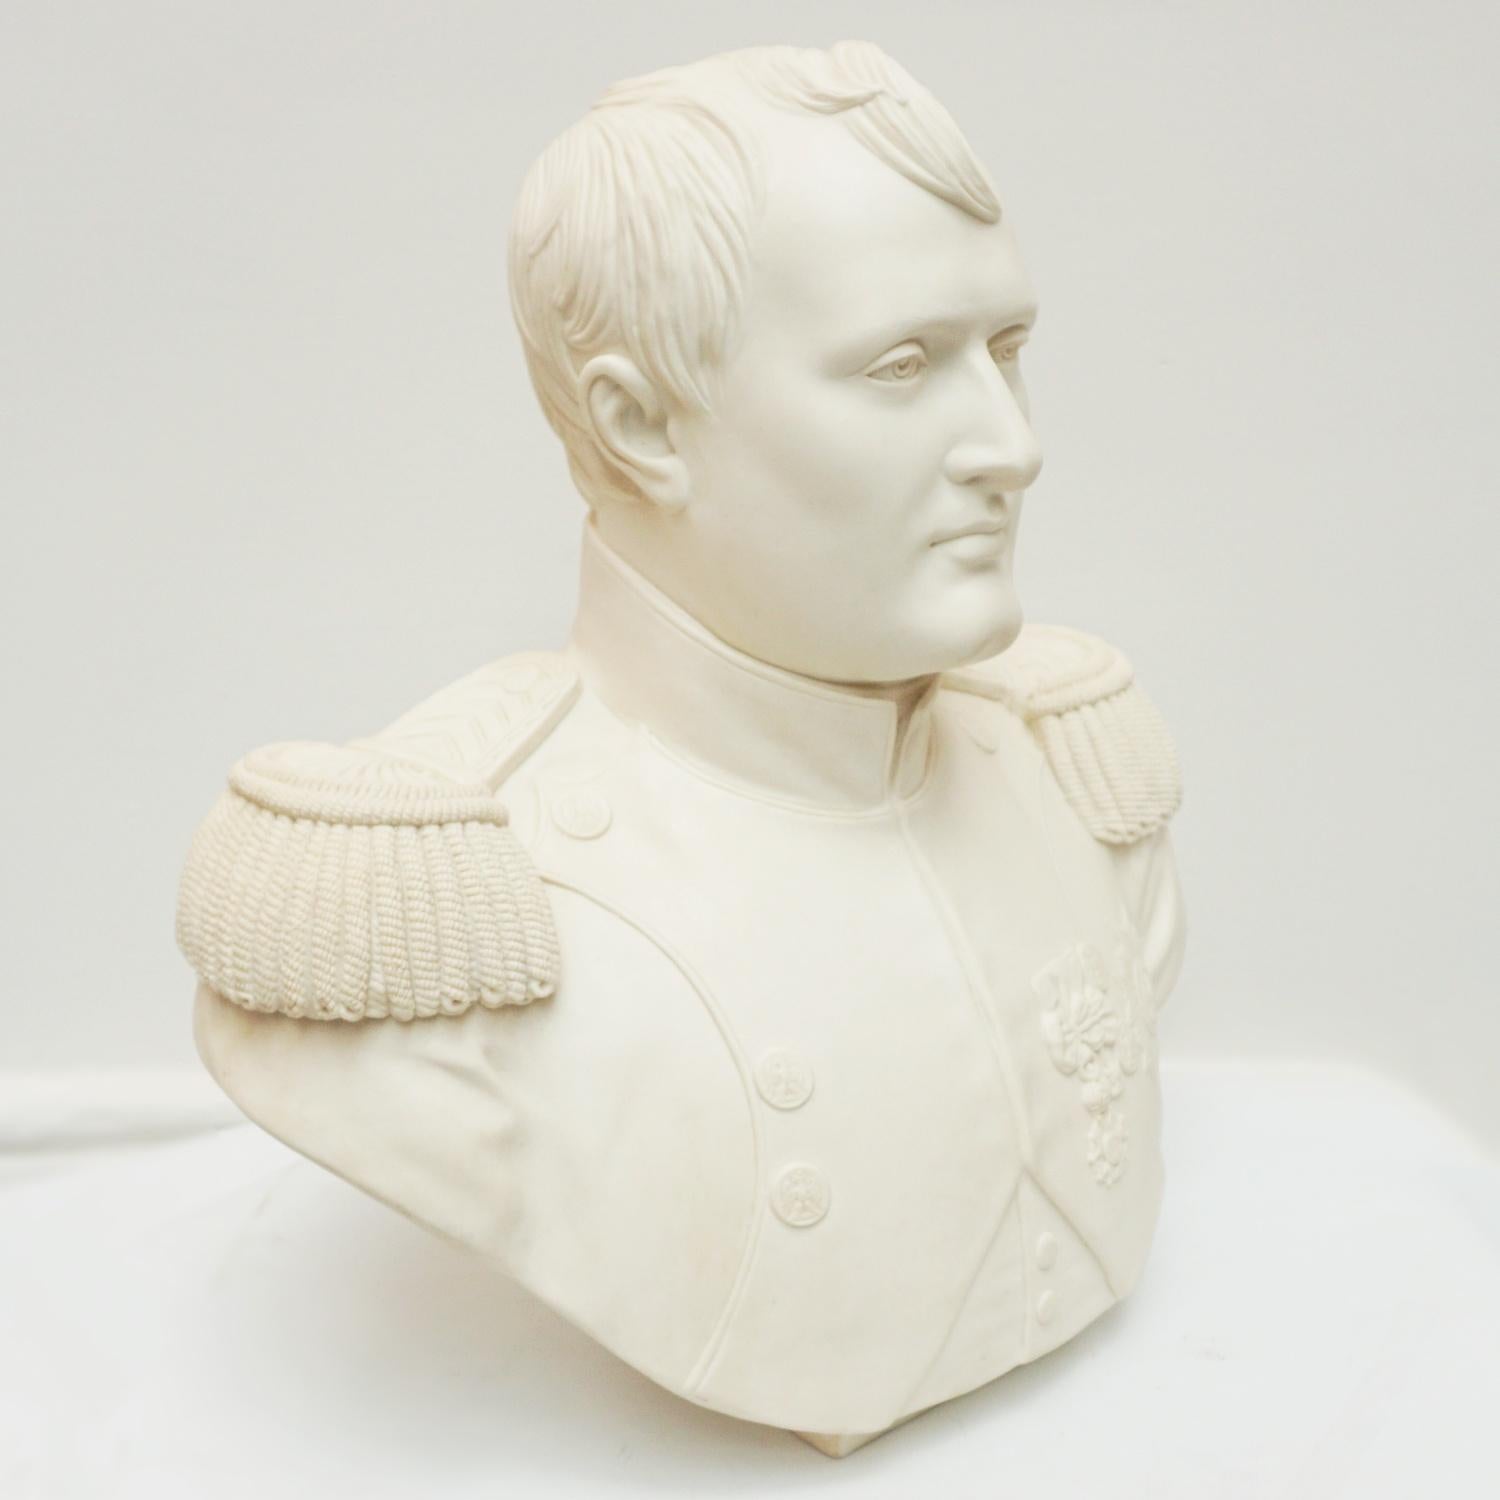 A Mid 19th Century life size biscuit porcelain portrait bust of Napoleon Bonaparte in military attire after Jean-Antoin Houdon. Etched ' Buste Officiel Napoleon Empereur 1805' to back.

Dimensions: H 52cm W 48cm D 24cm

Origin: French

Date: